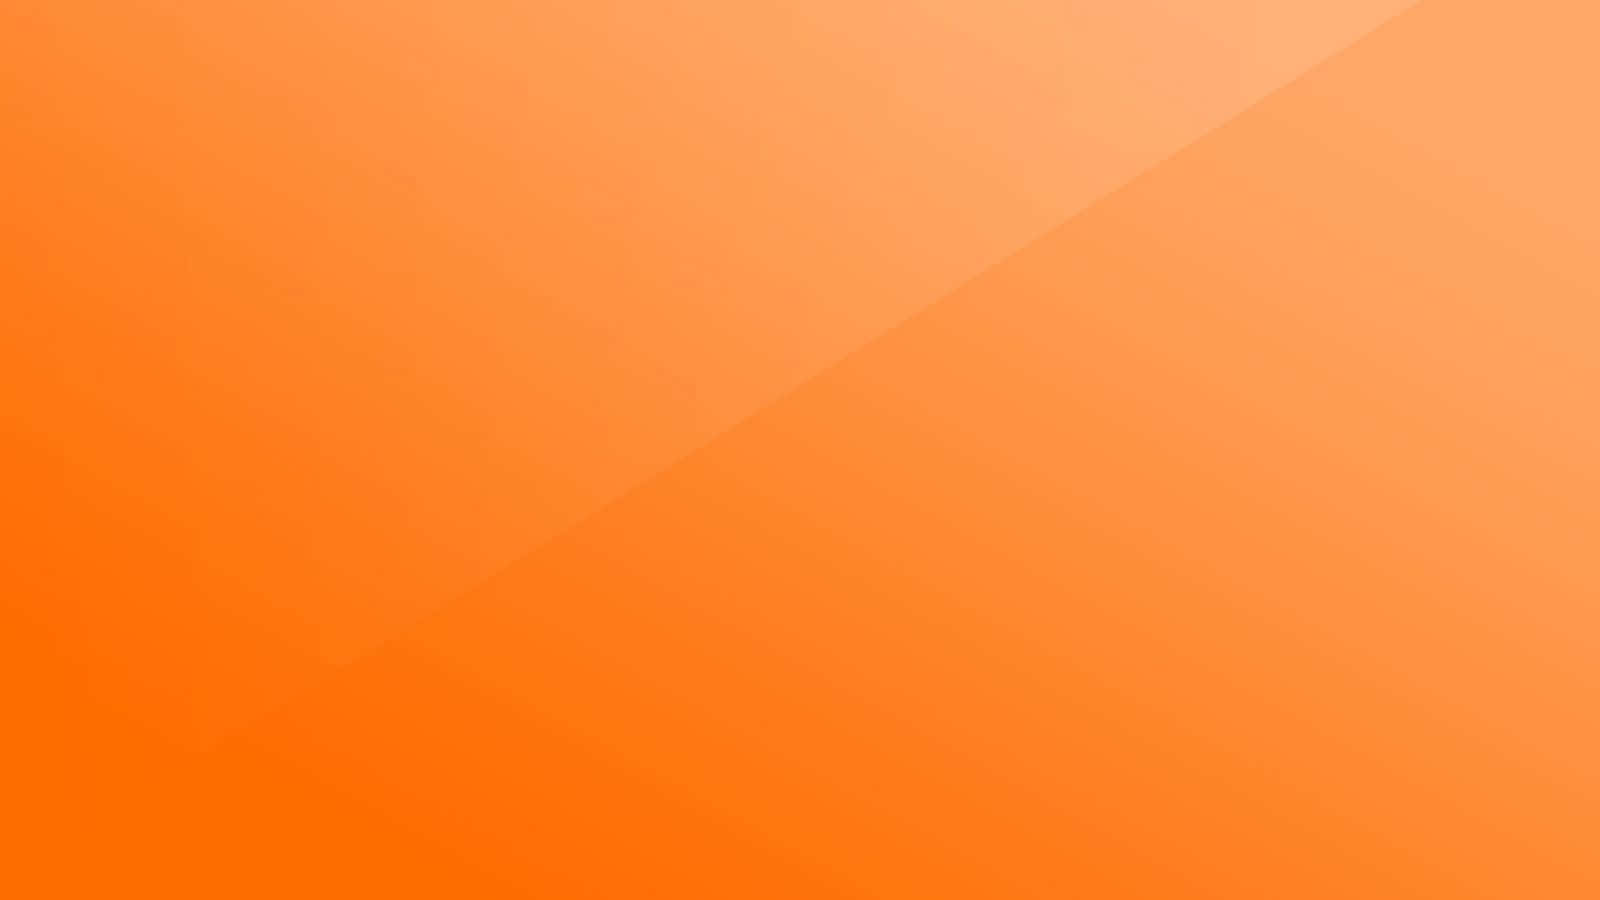 100+] Light Orange Backgrounds